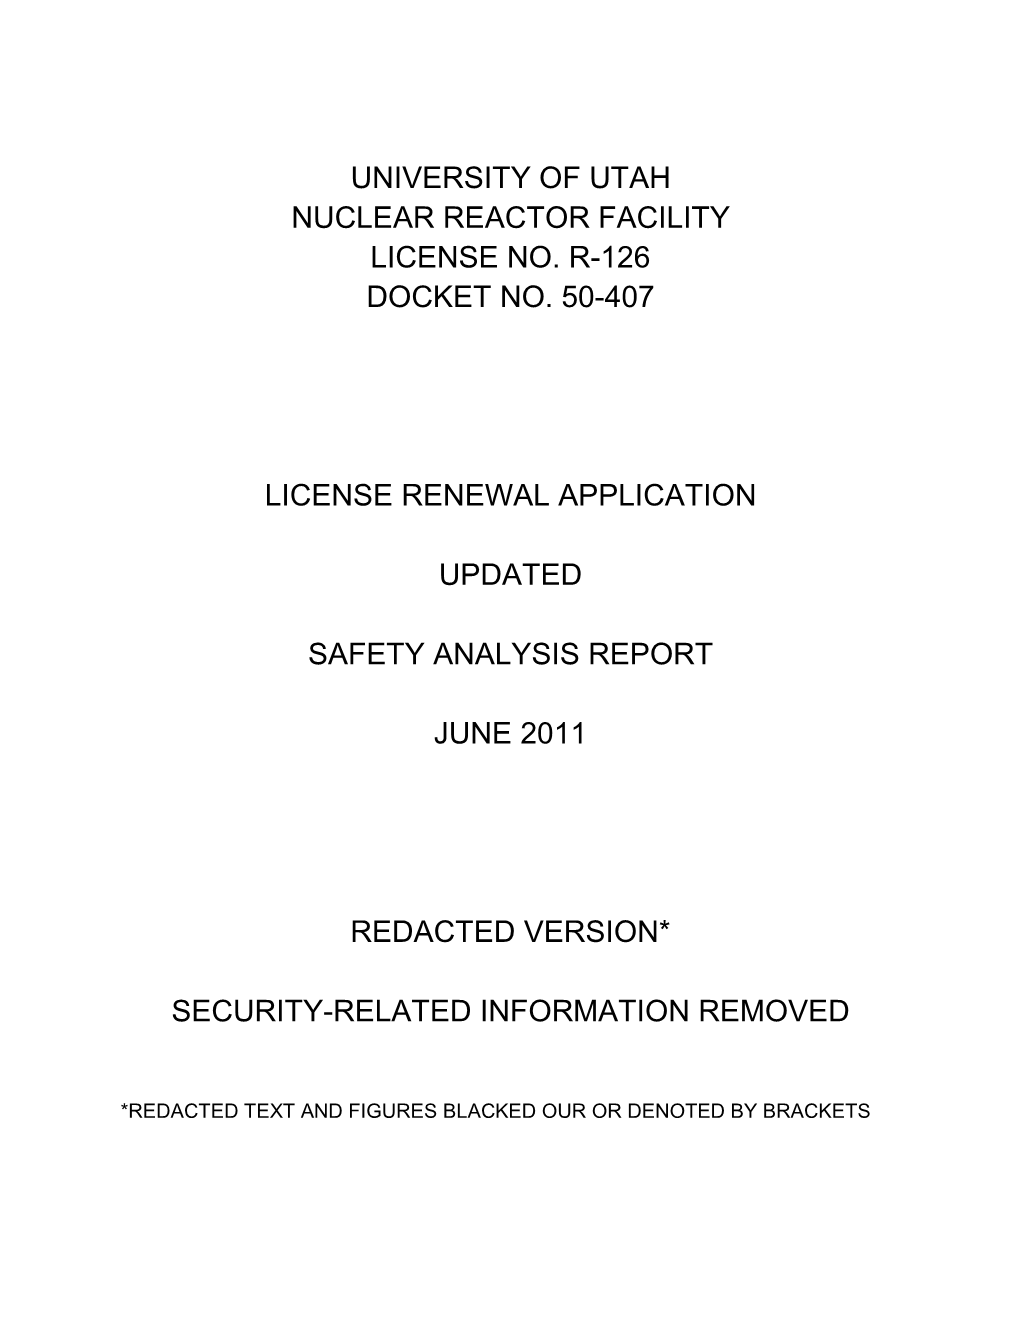 University of Utah TRIGA, License